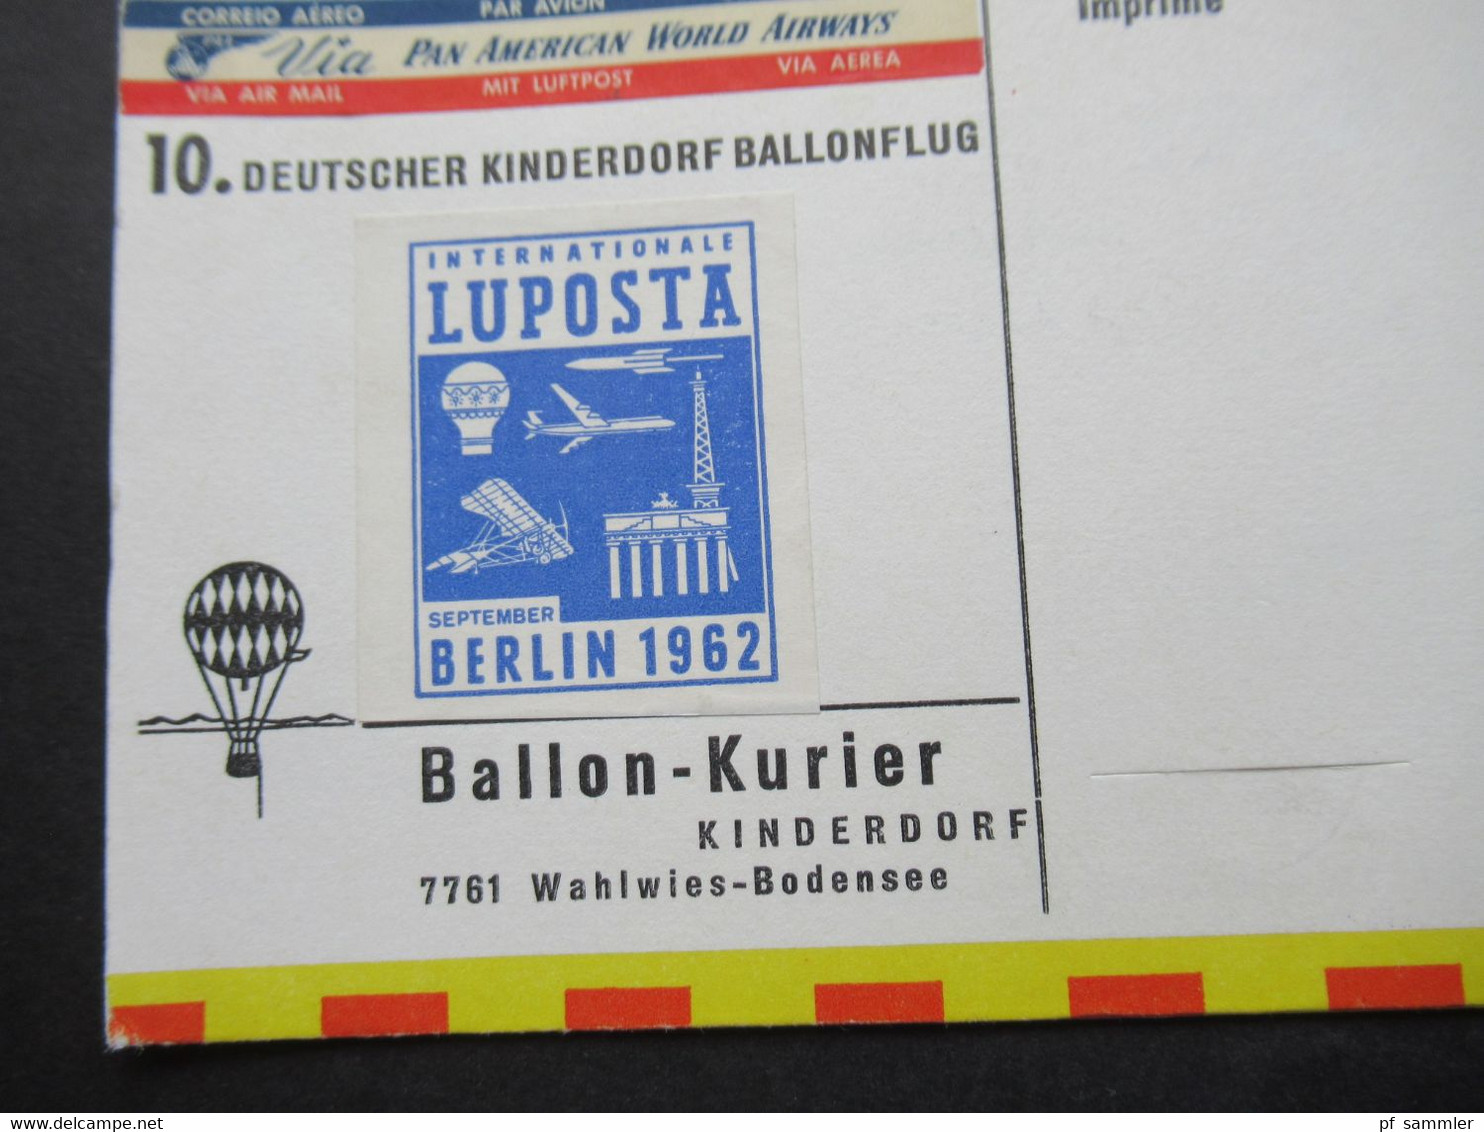 BRD 1950er / 60er Jahre Belegeposten Ballonpost 19 PK / Sonder PK / Motive mit vielen Stempeln und Vermerken!